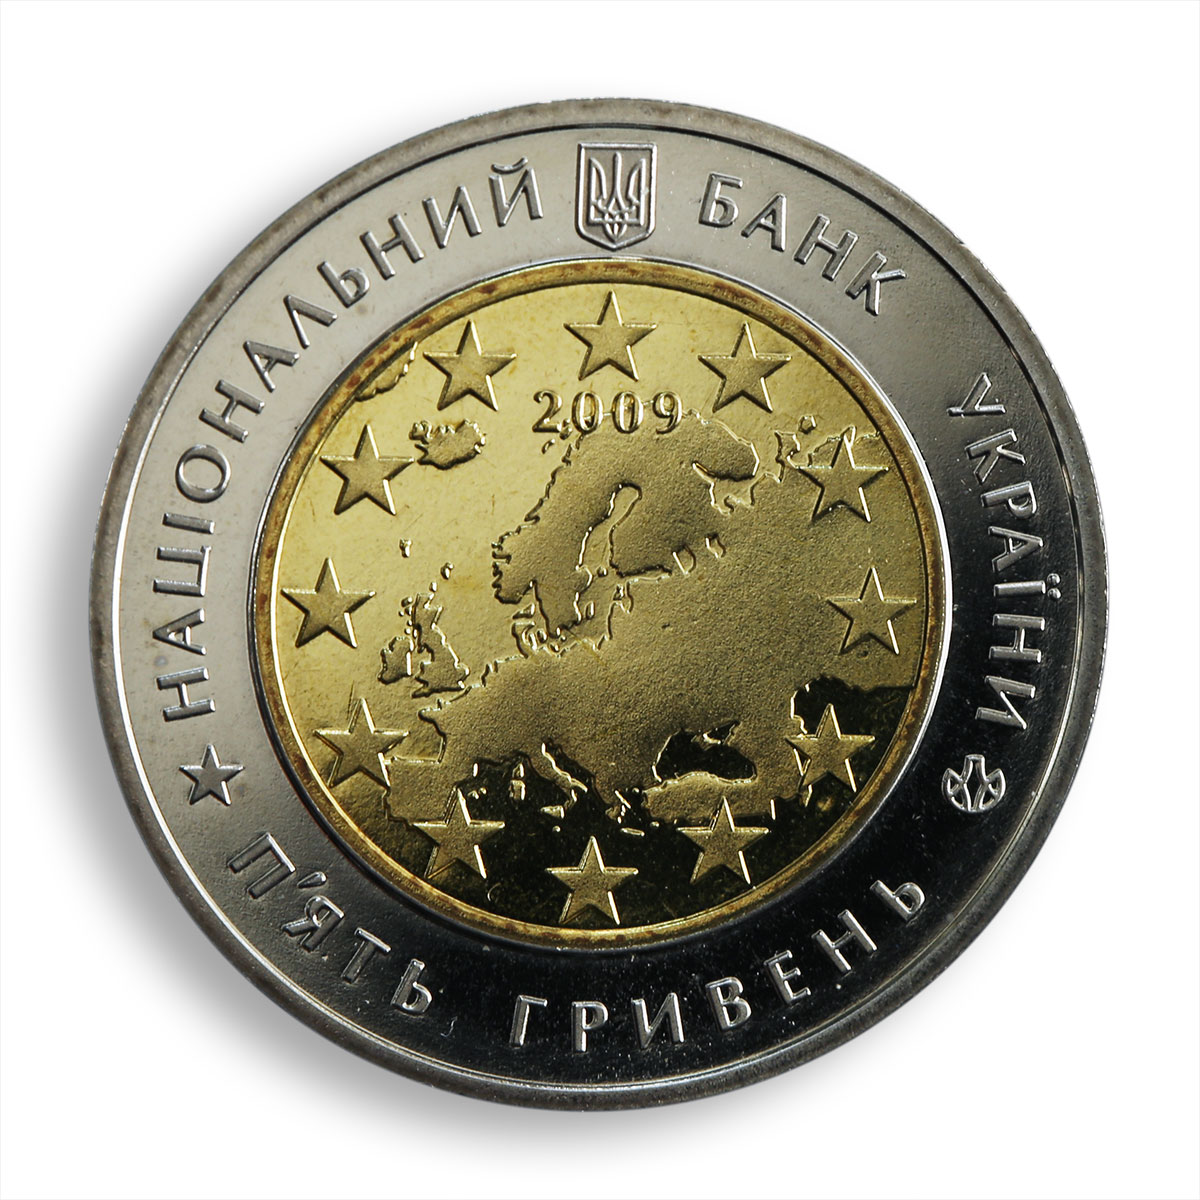 Ukraine 5 hryvnia 60 years of Council of Europe European Union bimetal coin 2009